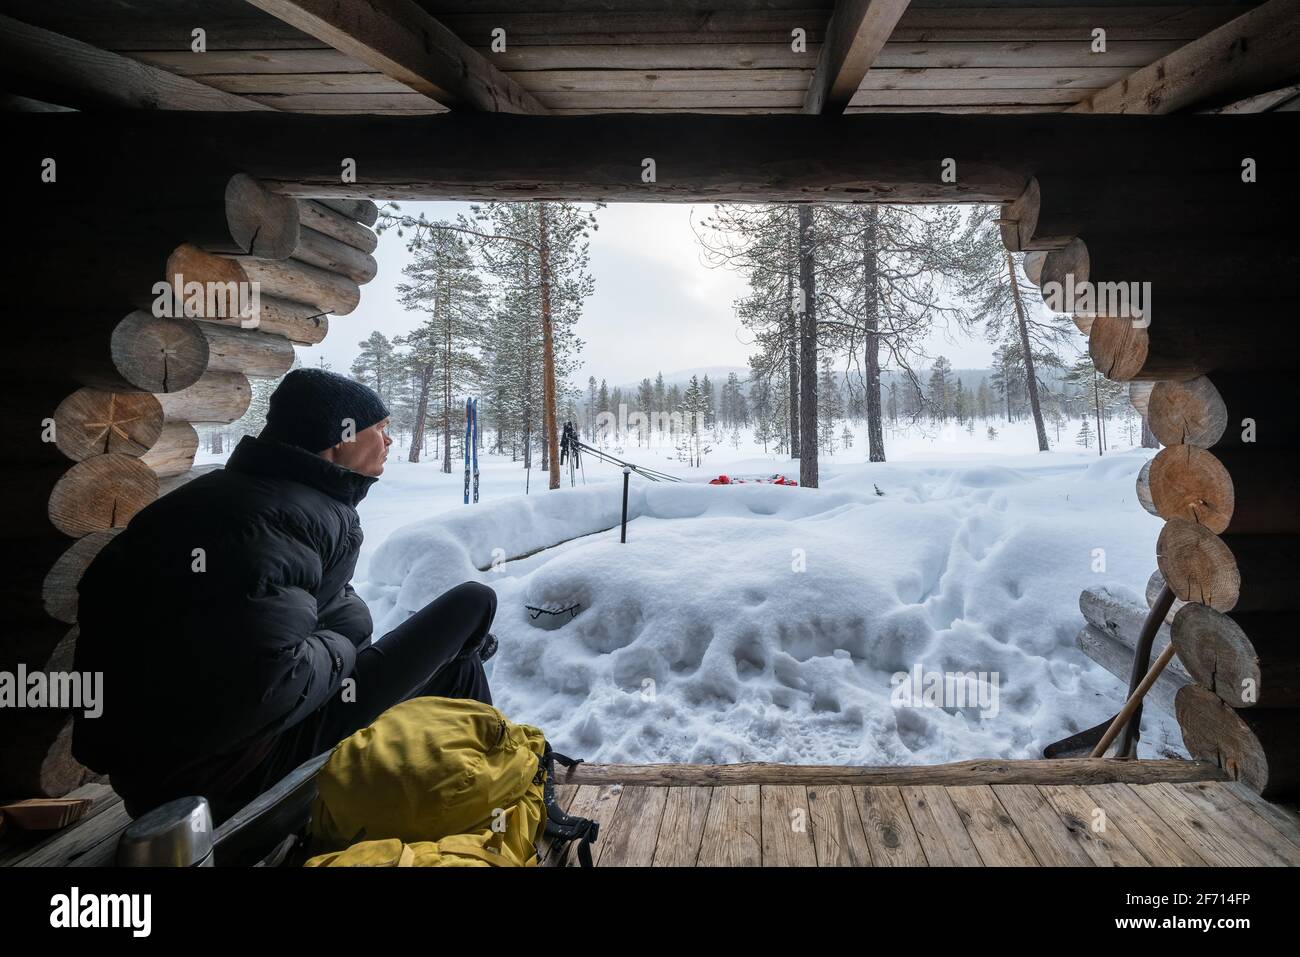 Eine Pause im Anterin pyöräparkki, ein Lean-to-Shelter, während einer Skitour im Urho-Kekkonen-Nationalpark, Sodankylä, Lappland, Finnland Stockfoto